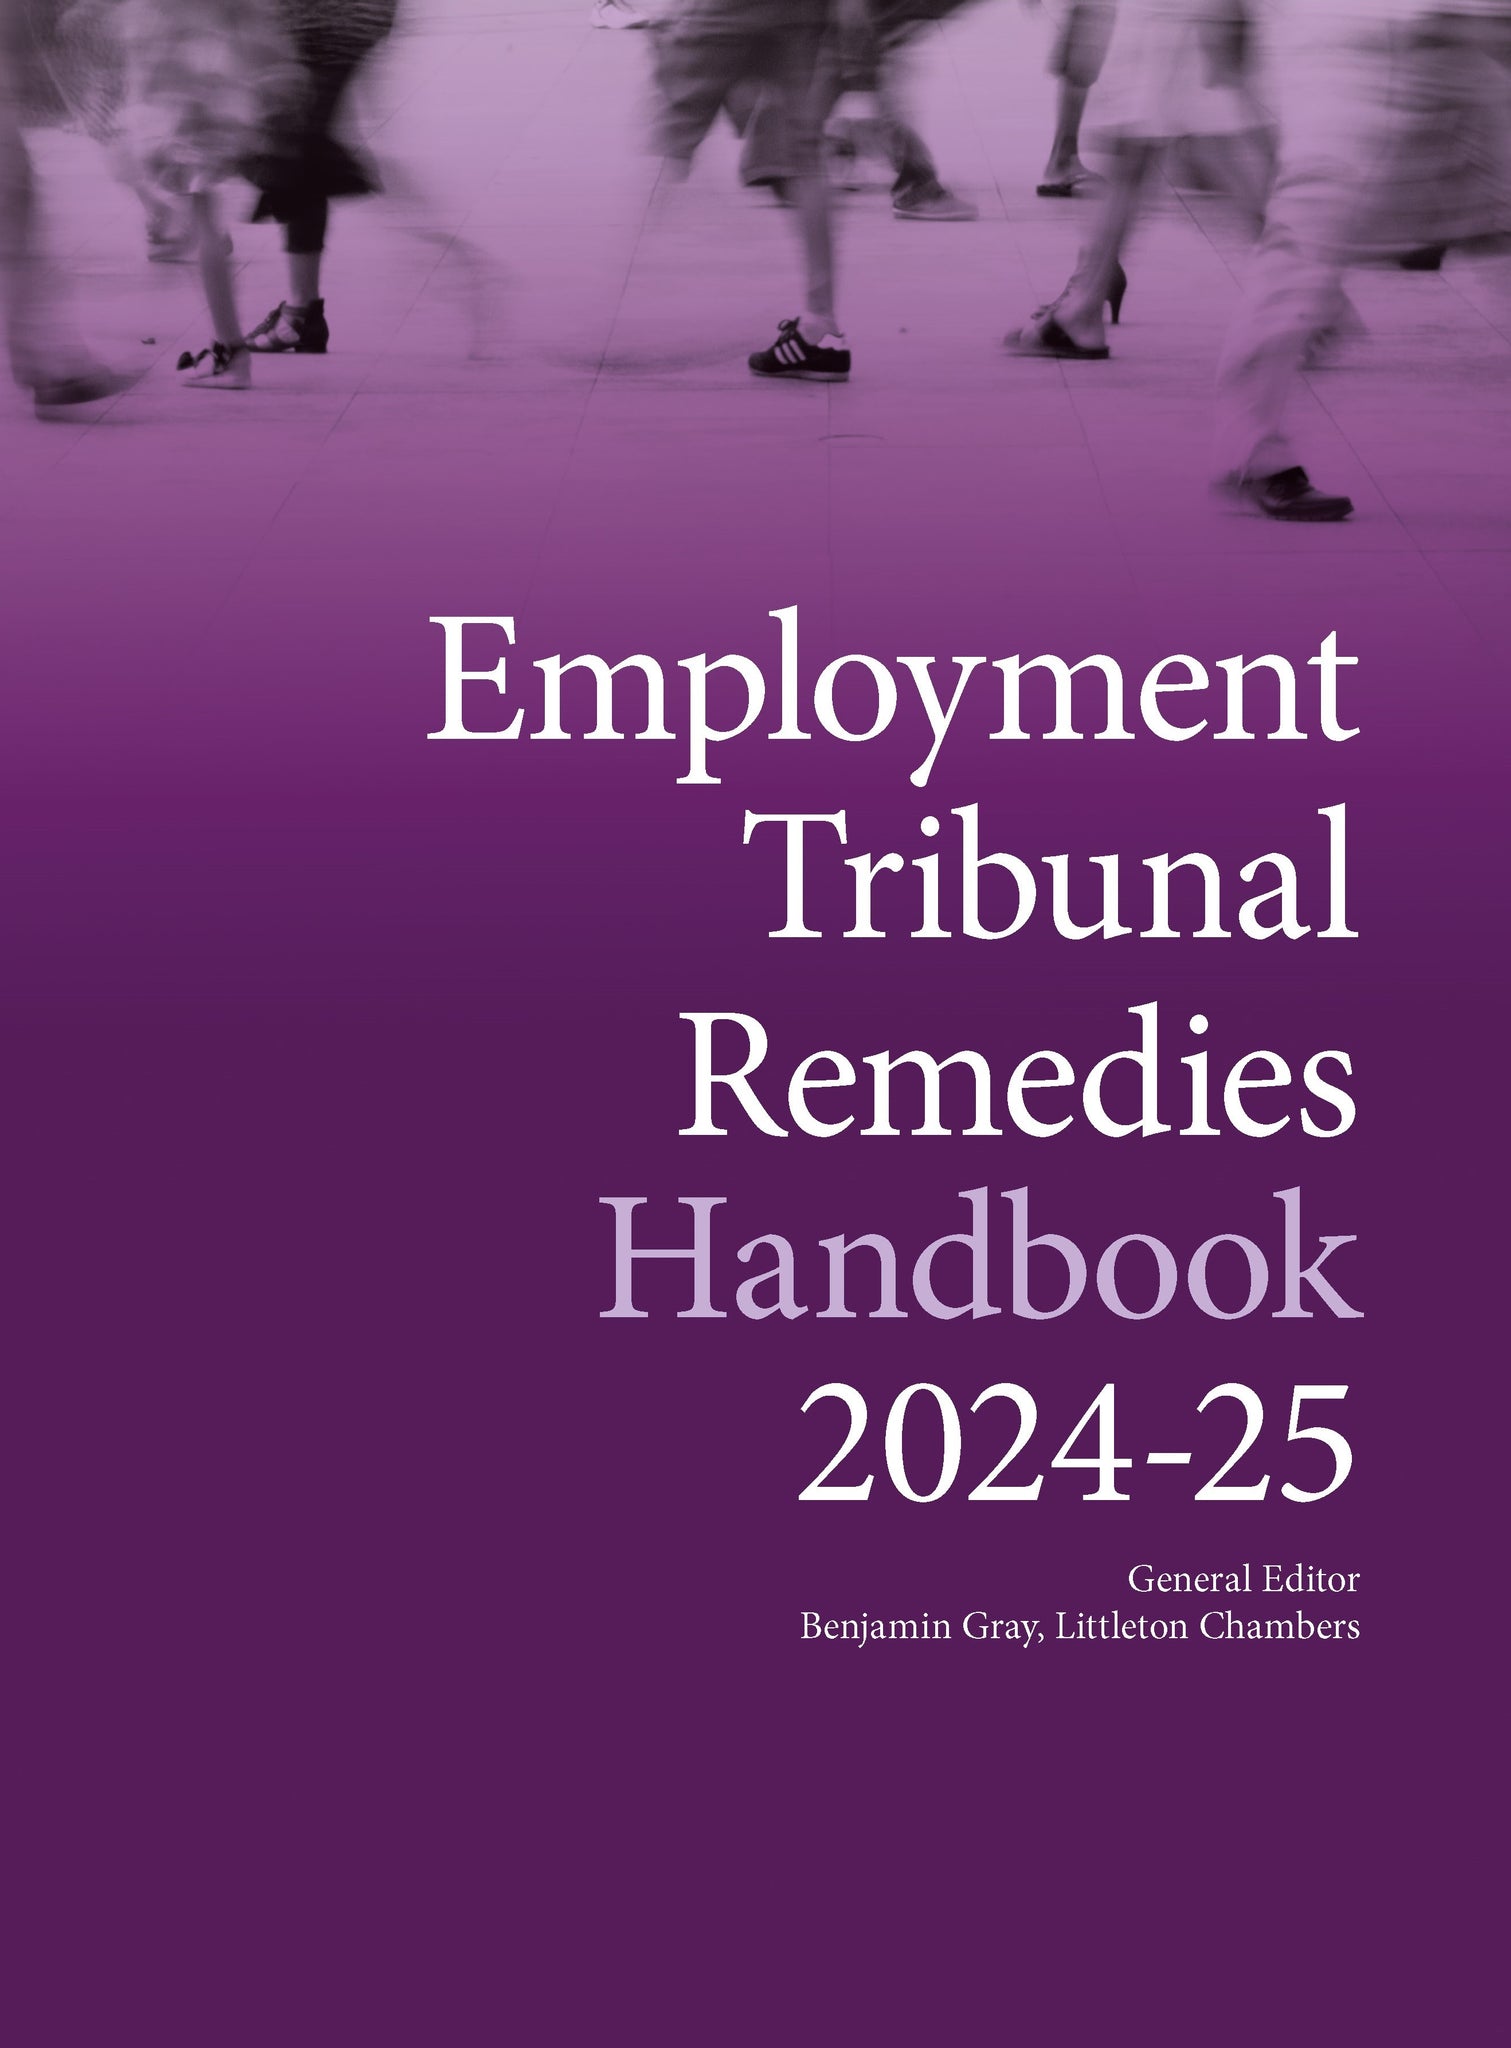 Employment Tribunal Remedies Handbook 2024-25 (print + digital)